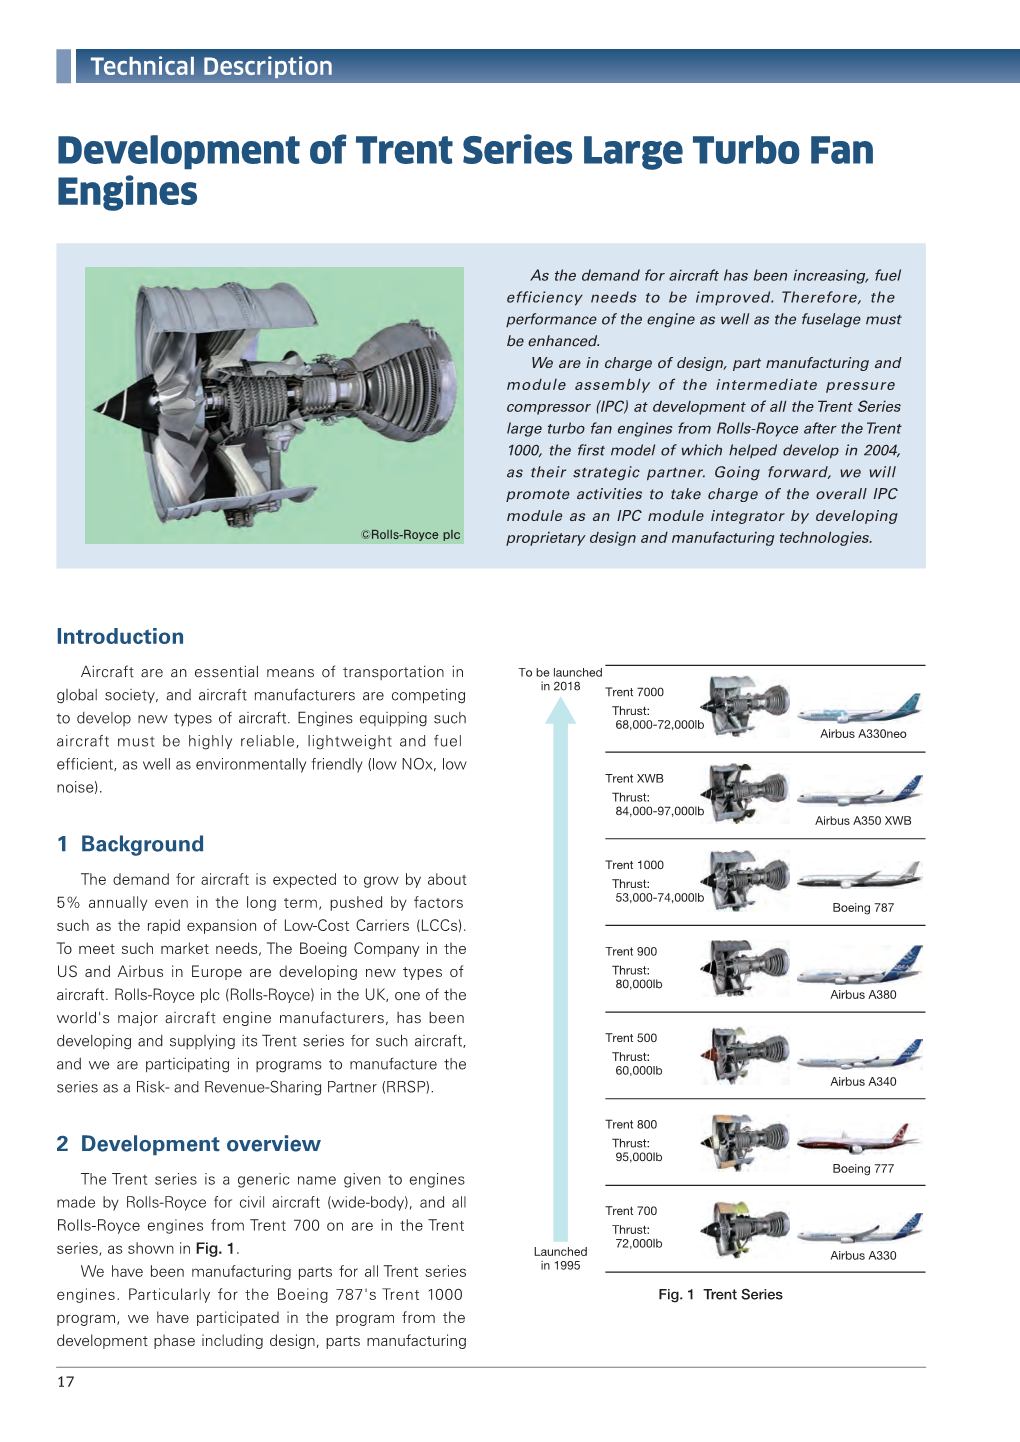 Development of Trent Series Large Turbo Fan Engines